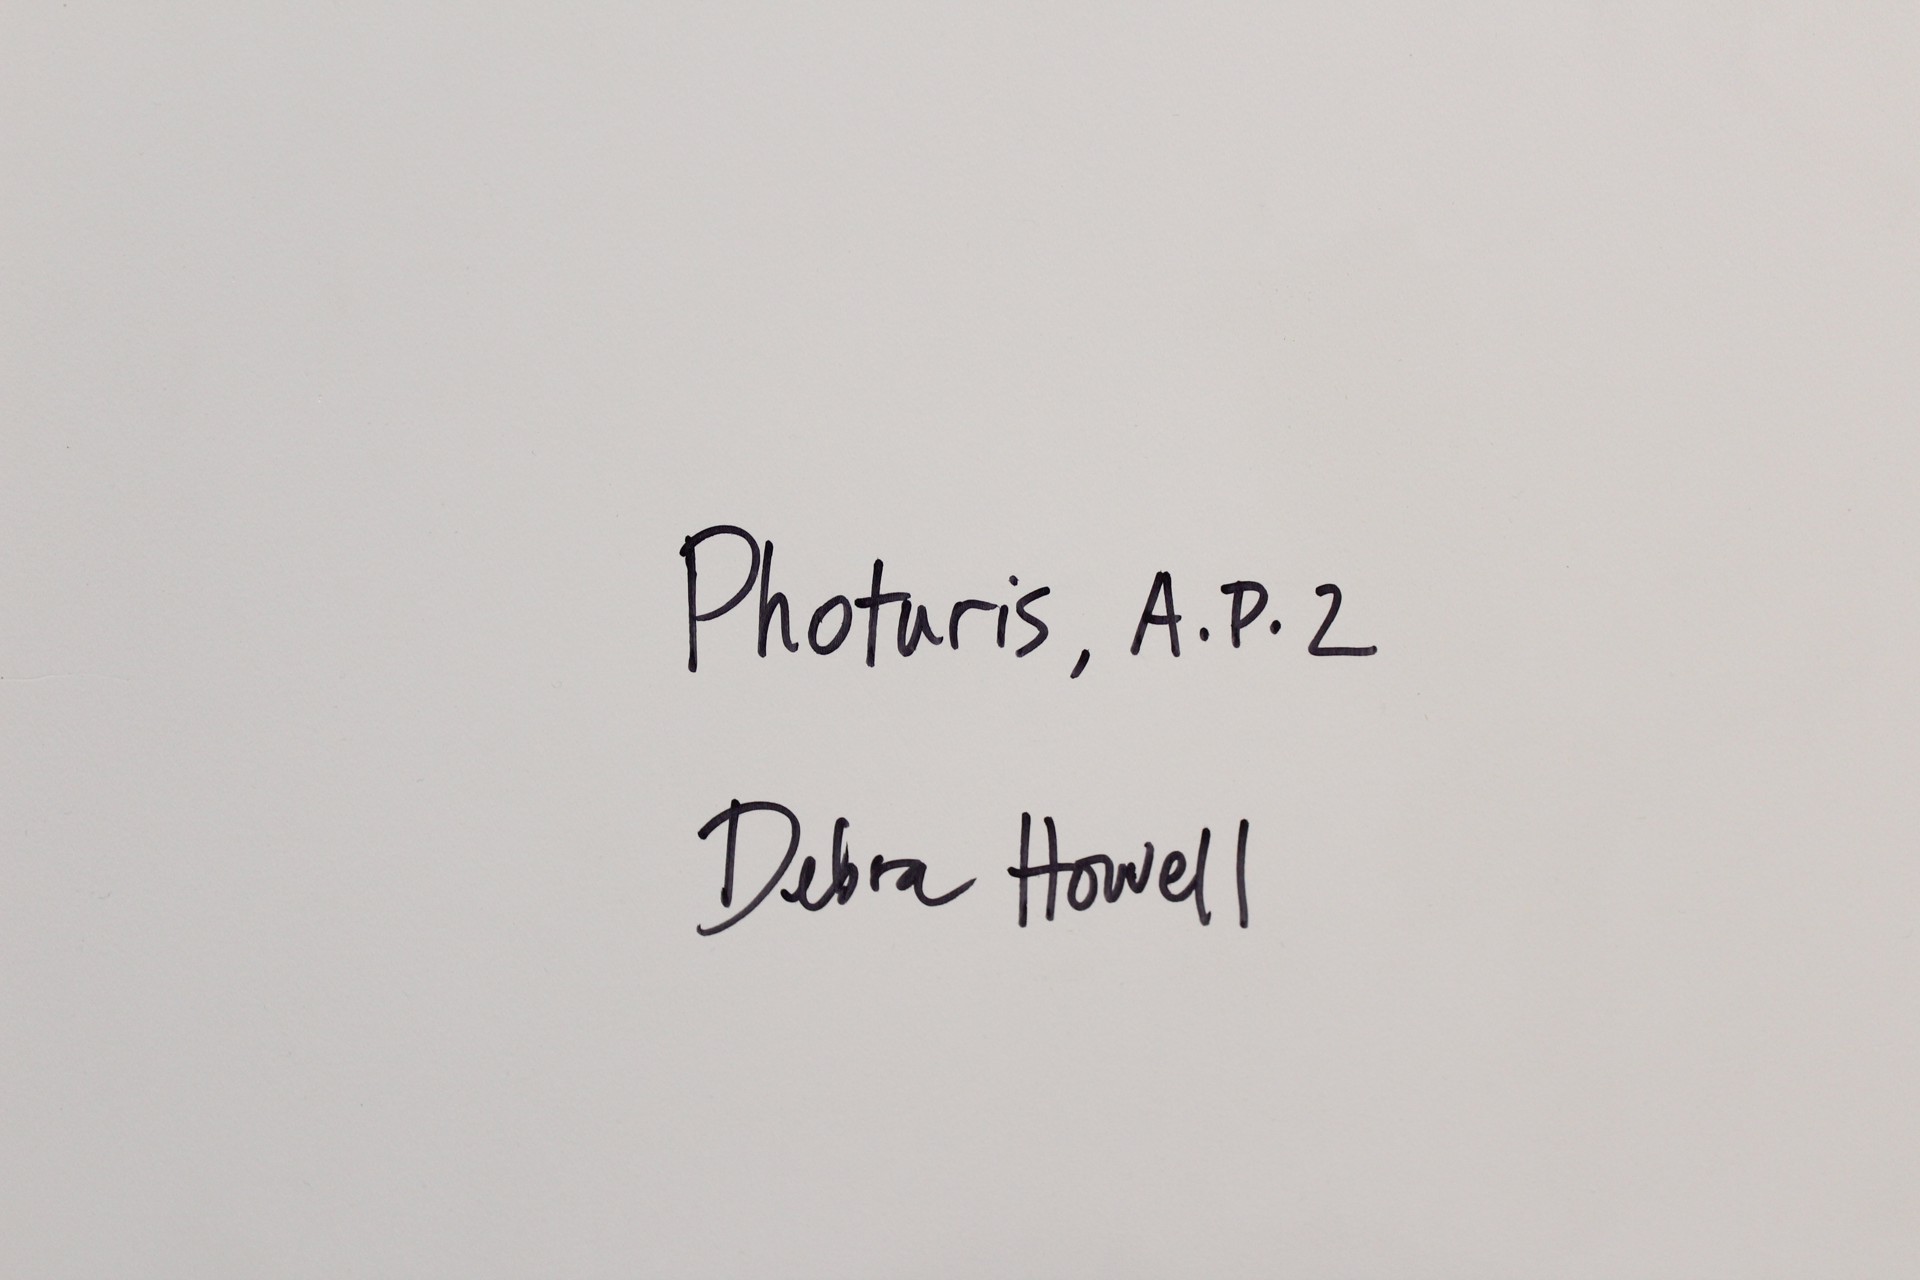 Photuris by Debra Howell